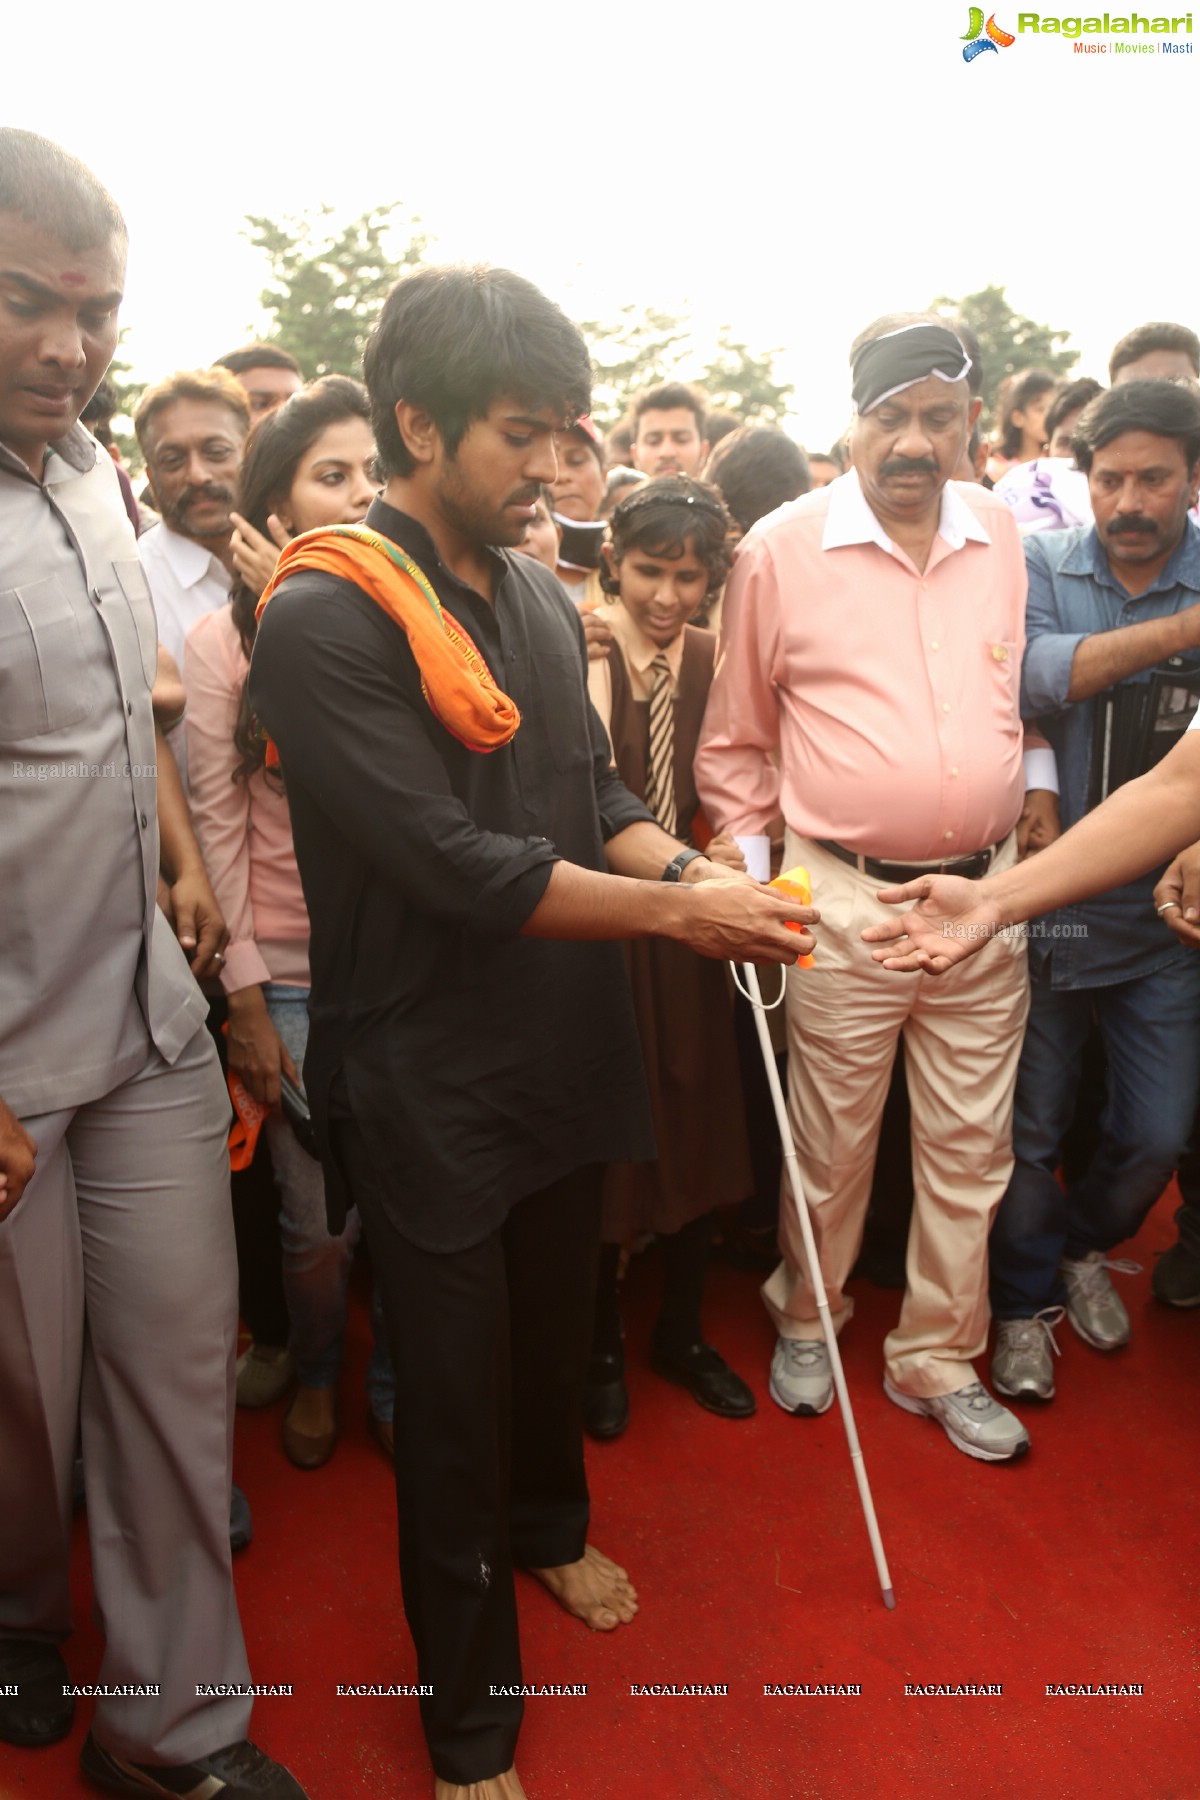 Ram Charan at Devnar World Sight Day Walk 'Mission to Give Vision'